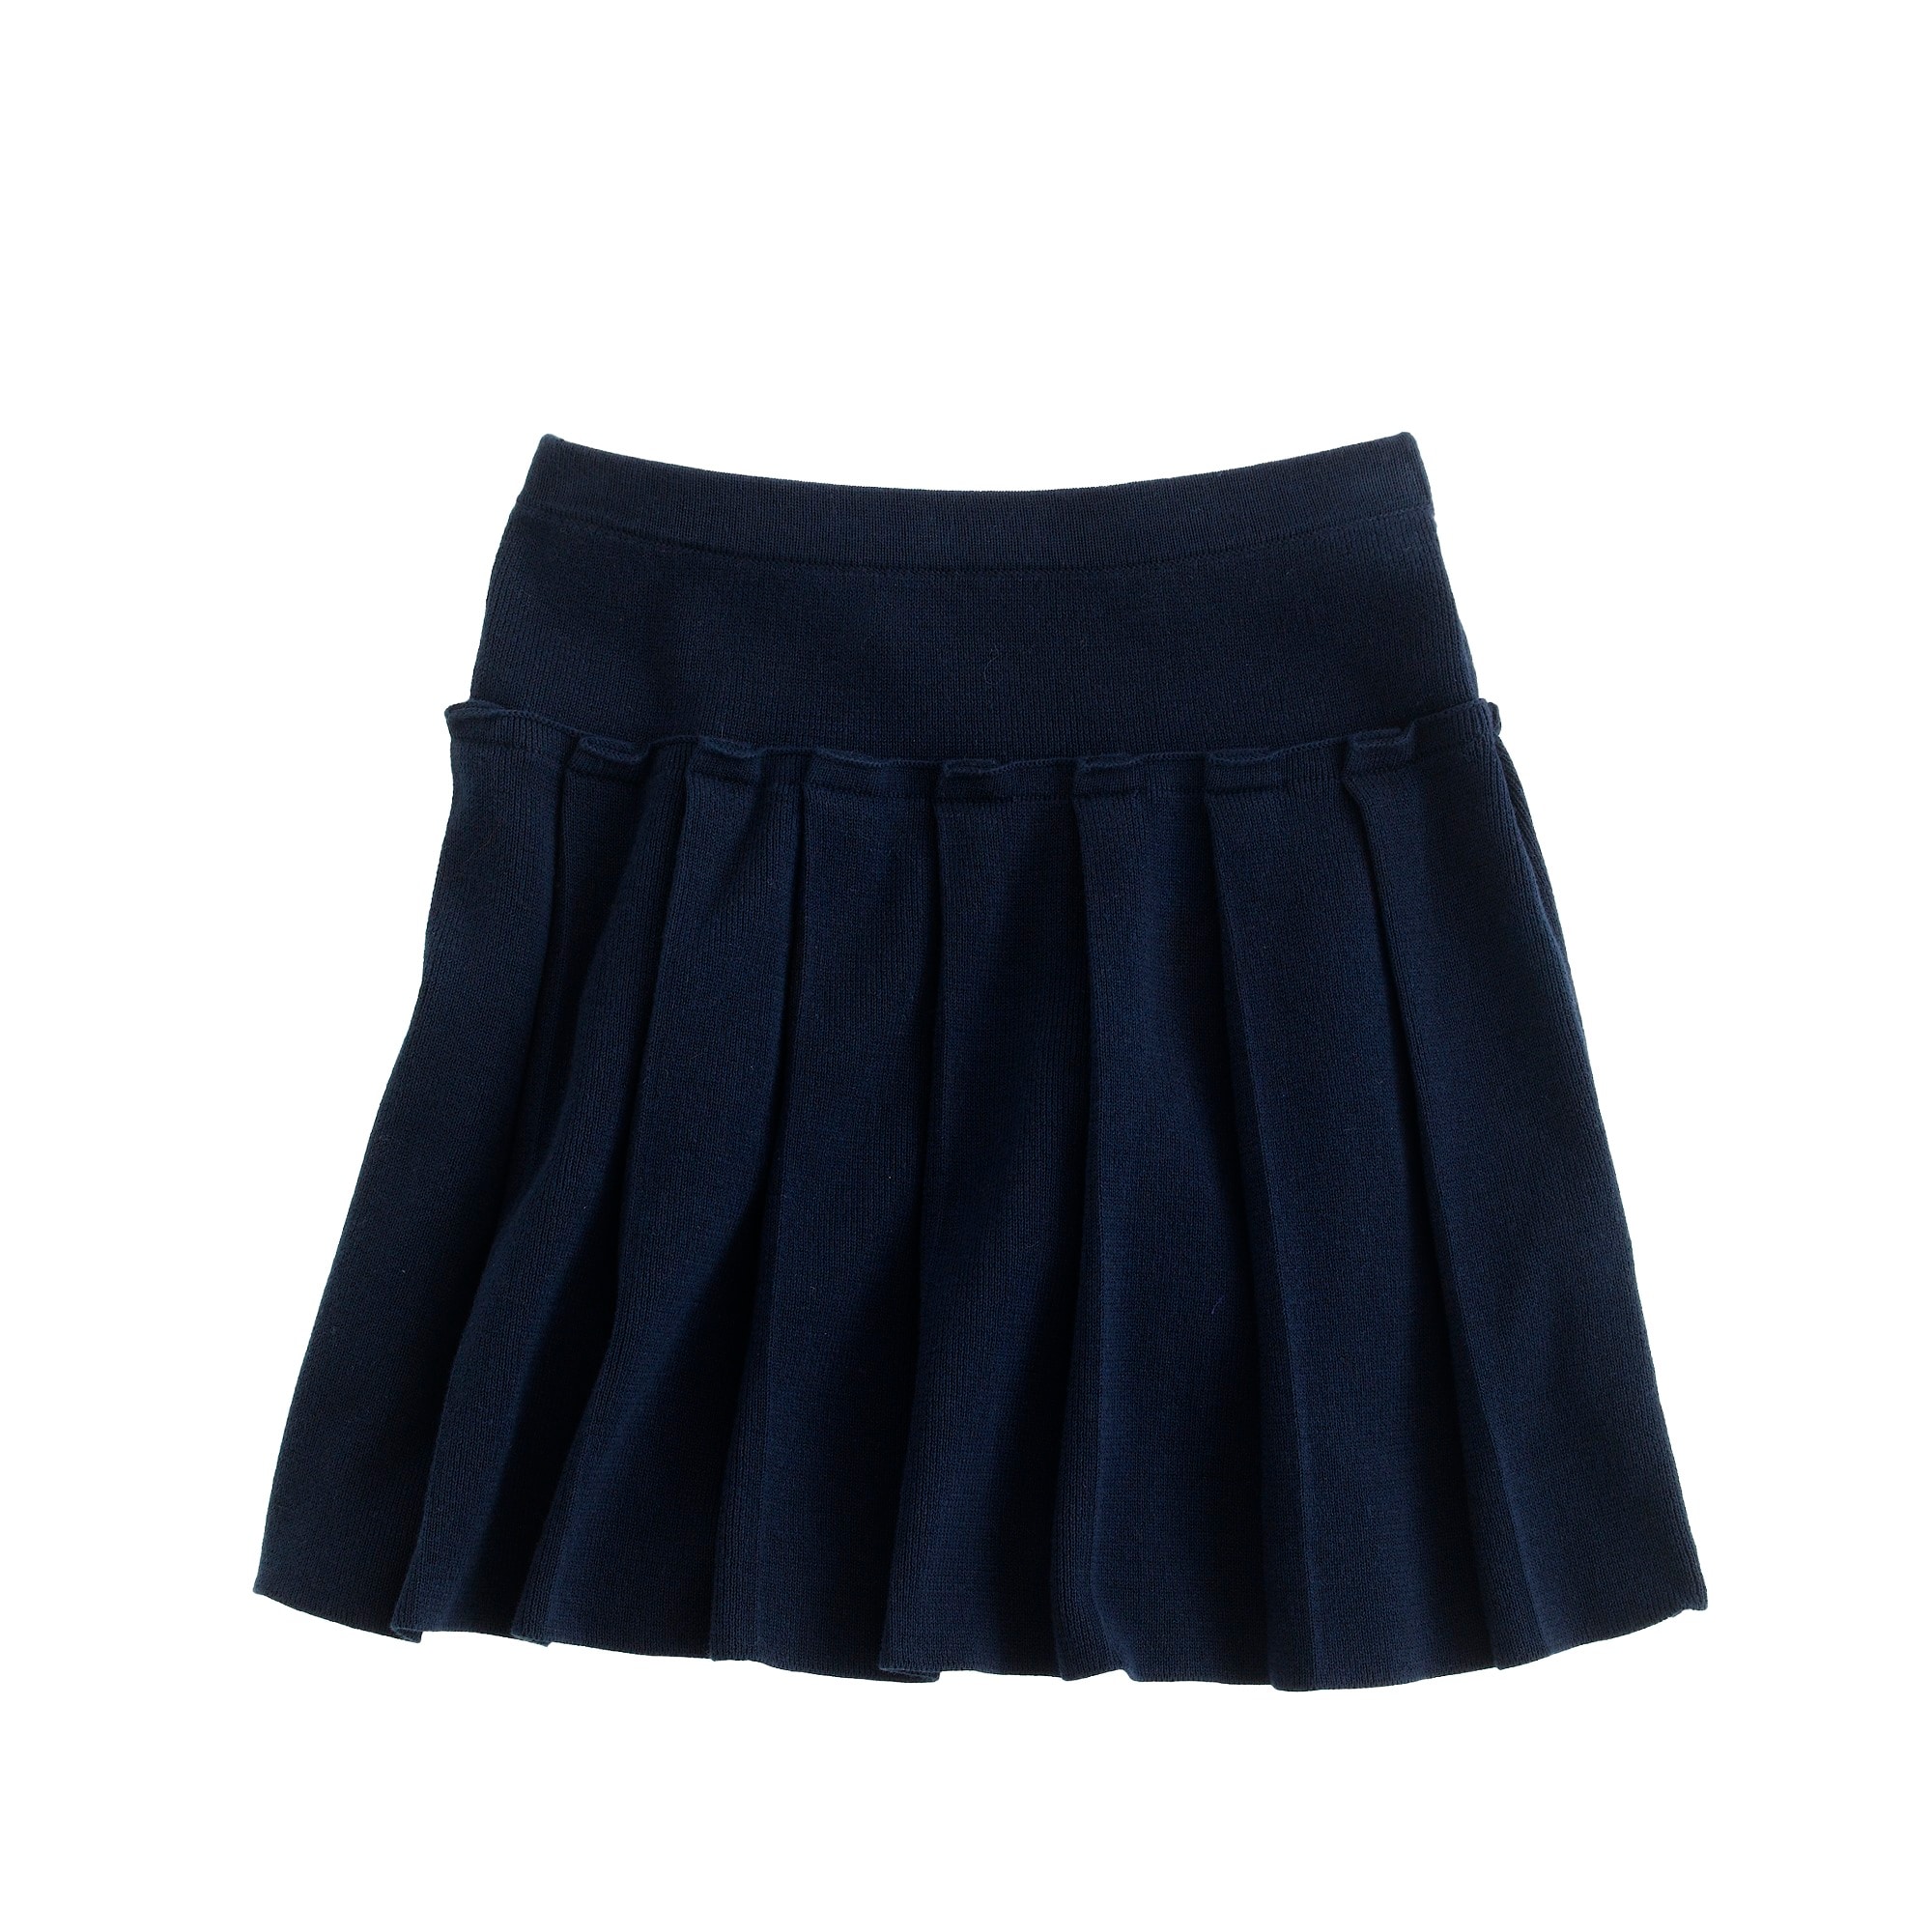 Girls' saunter skirt : Girl sweater dresses and bottoms | J.Crew